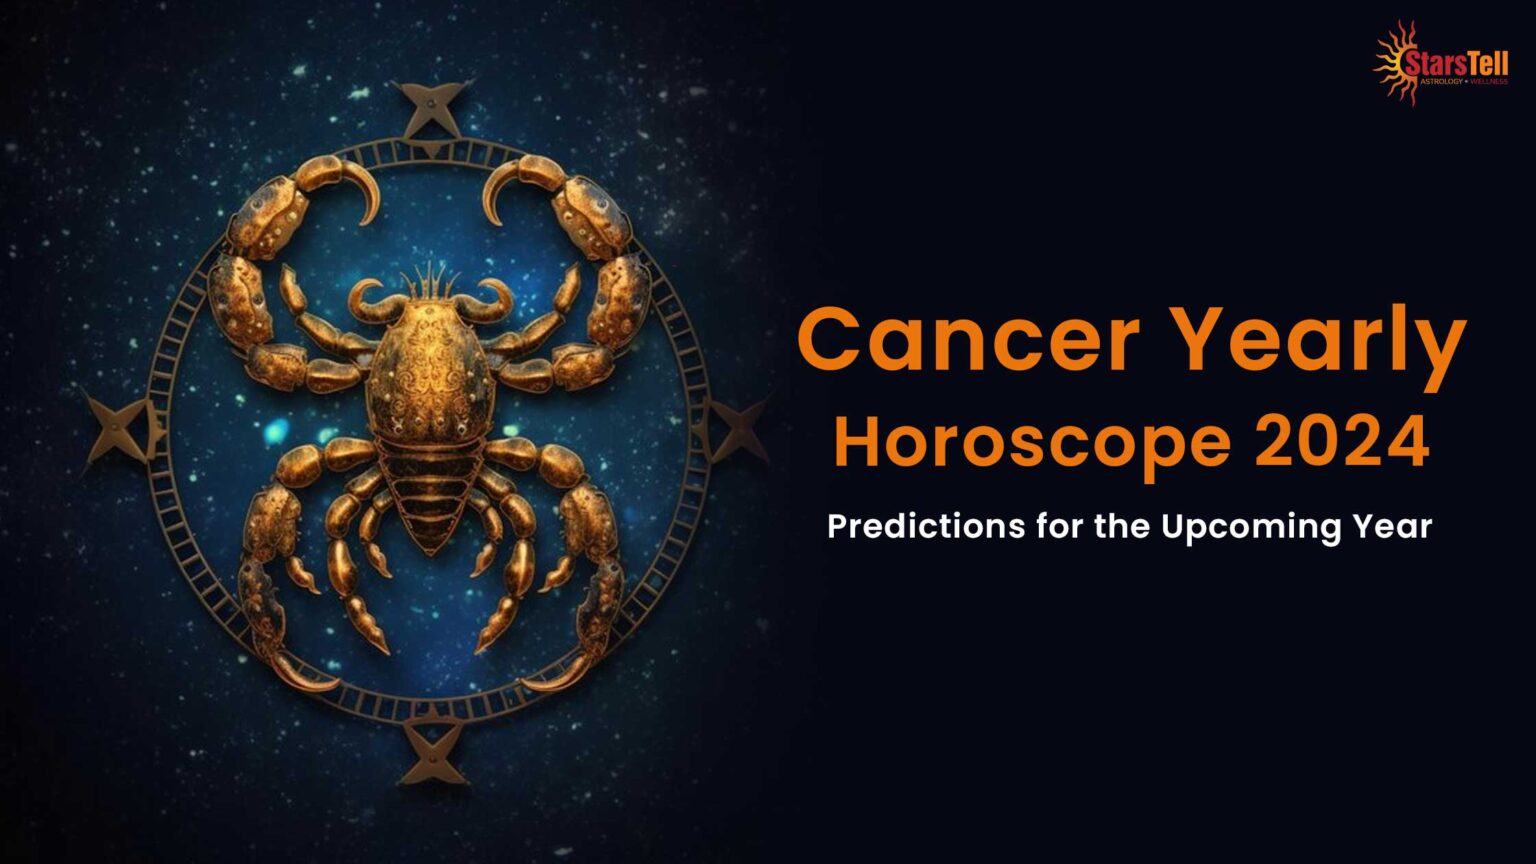 Cancer Yearly Horoscope 2024 1536x864 